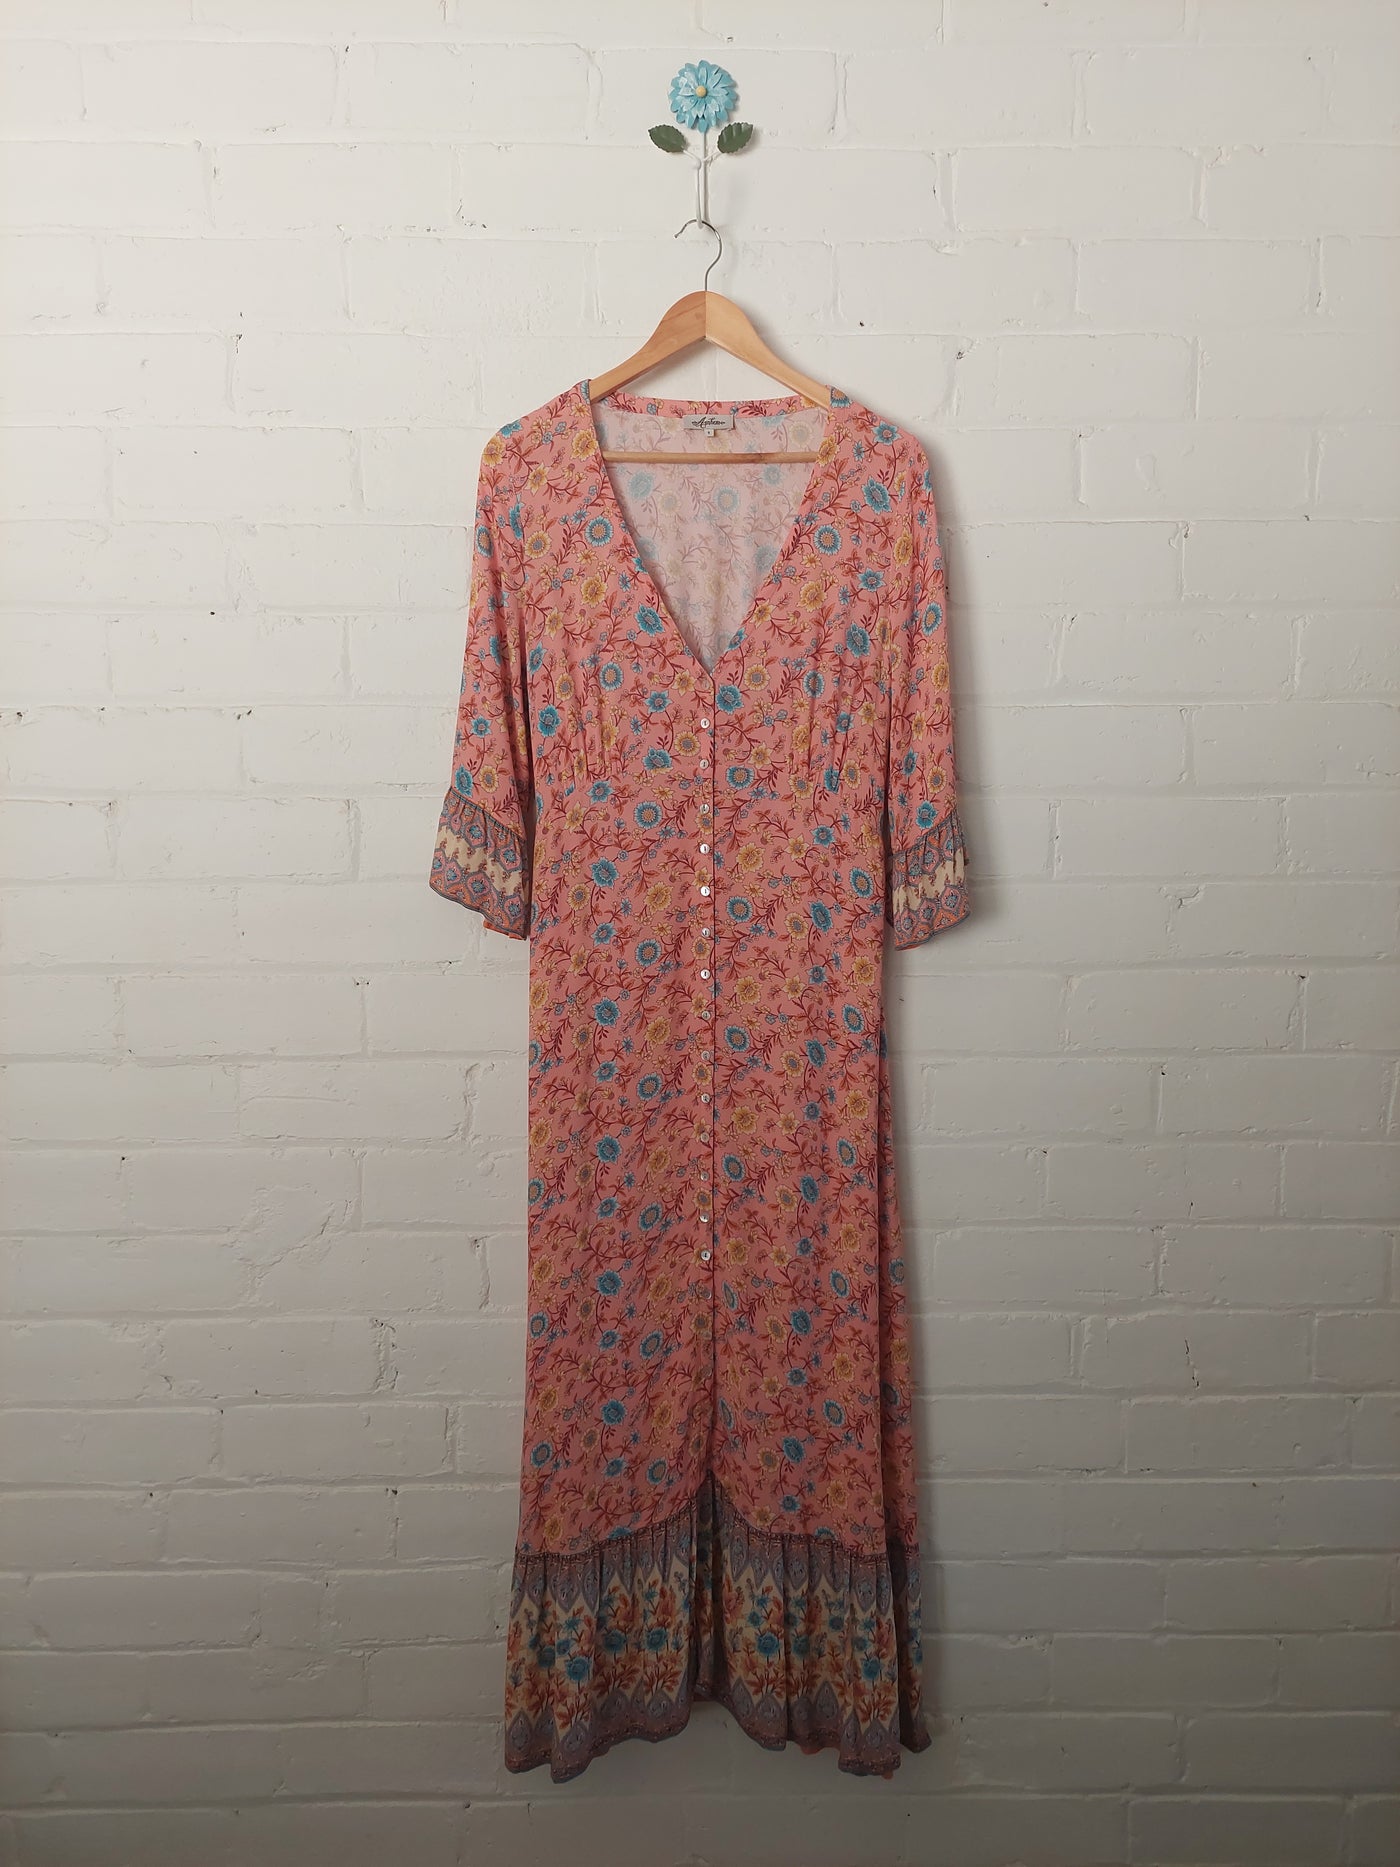 Arnhem Clothing Bijoux Maxi Duster Dress in Coral, Size 8